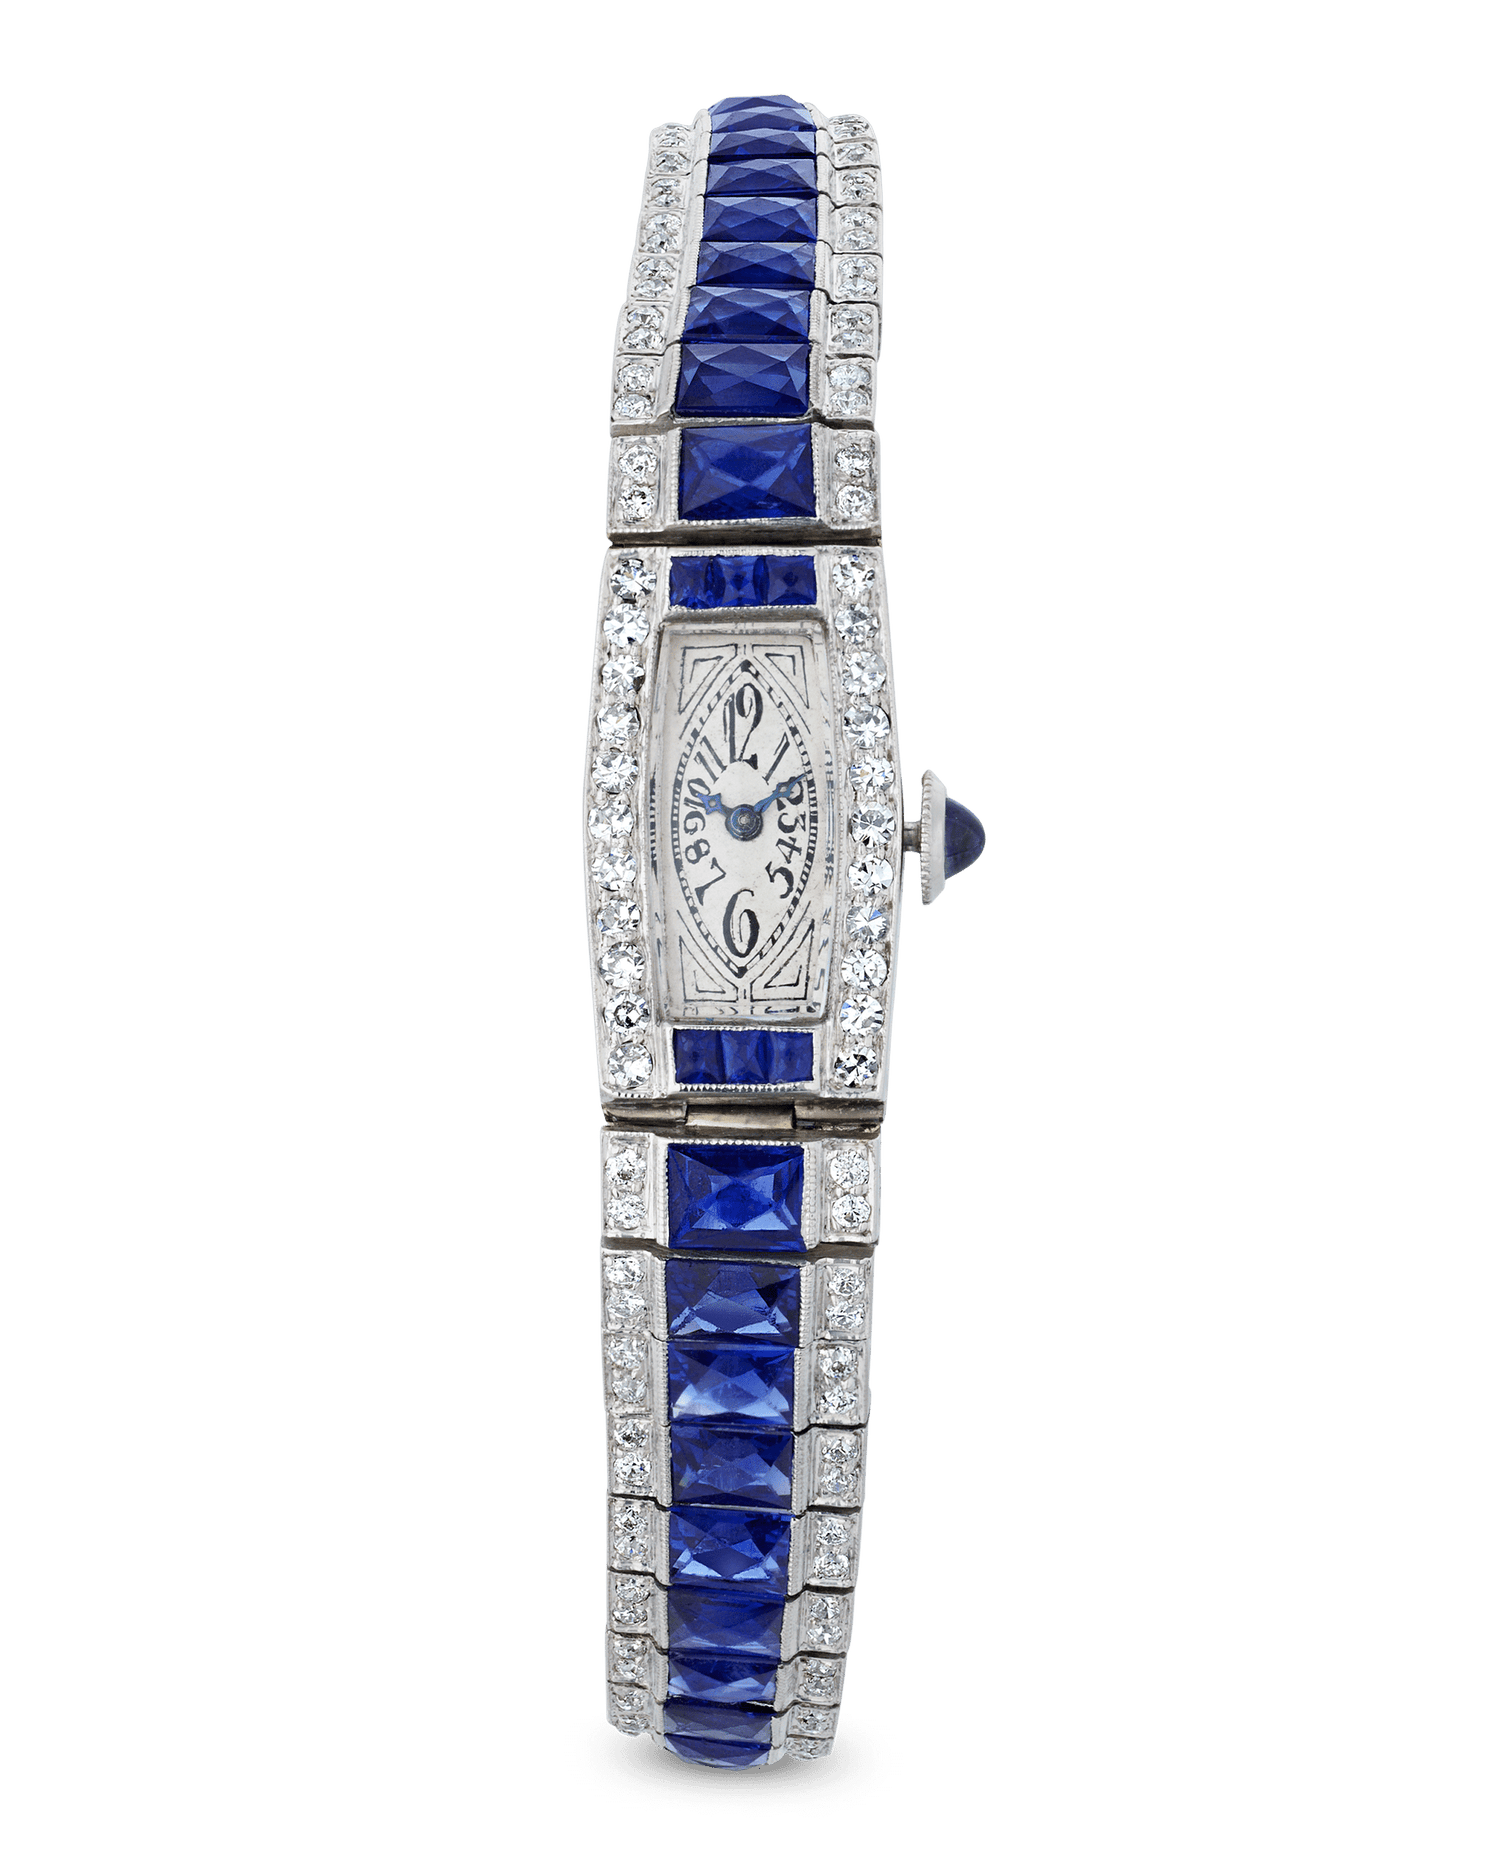 Tiffany & Co. Blue Sapphire and Diamond Watch